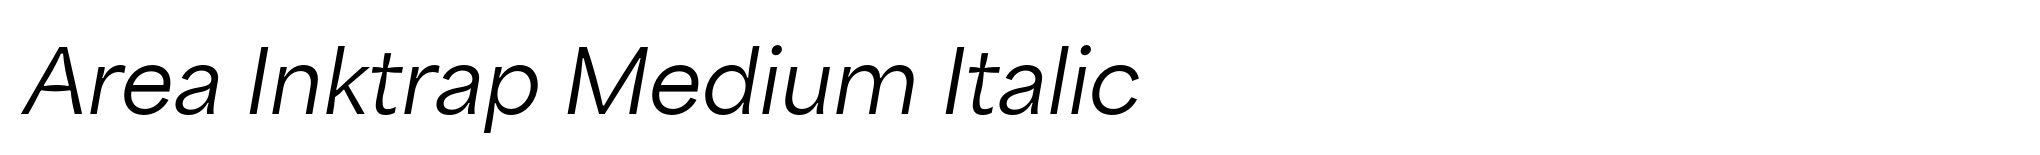 Area Inktrap Medium Italic image